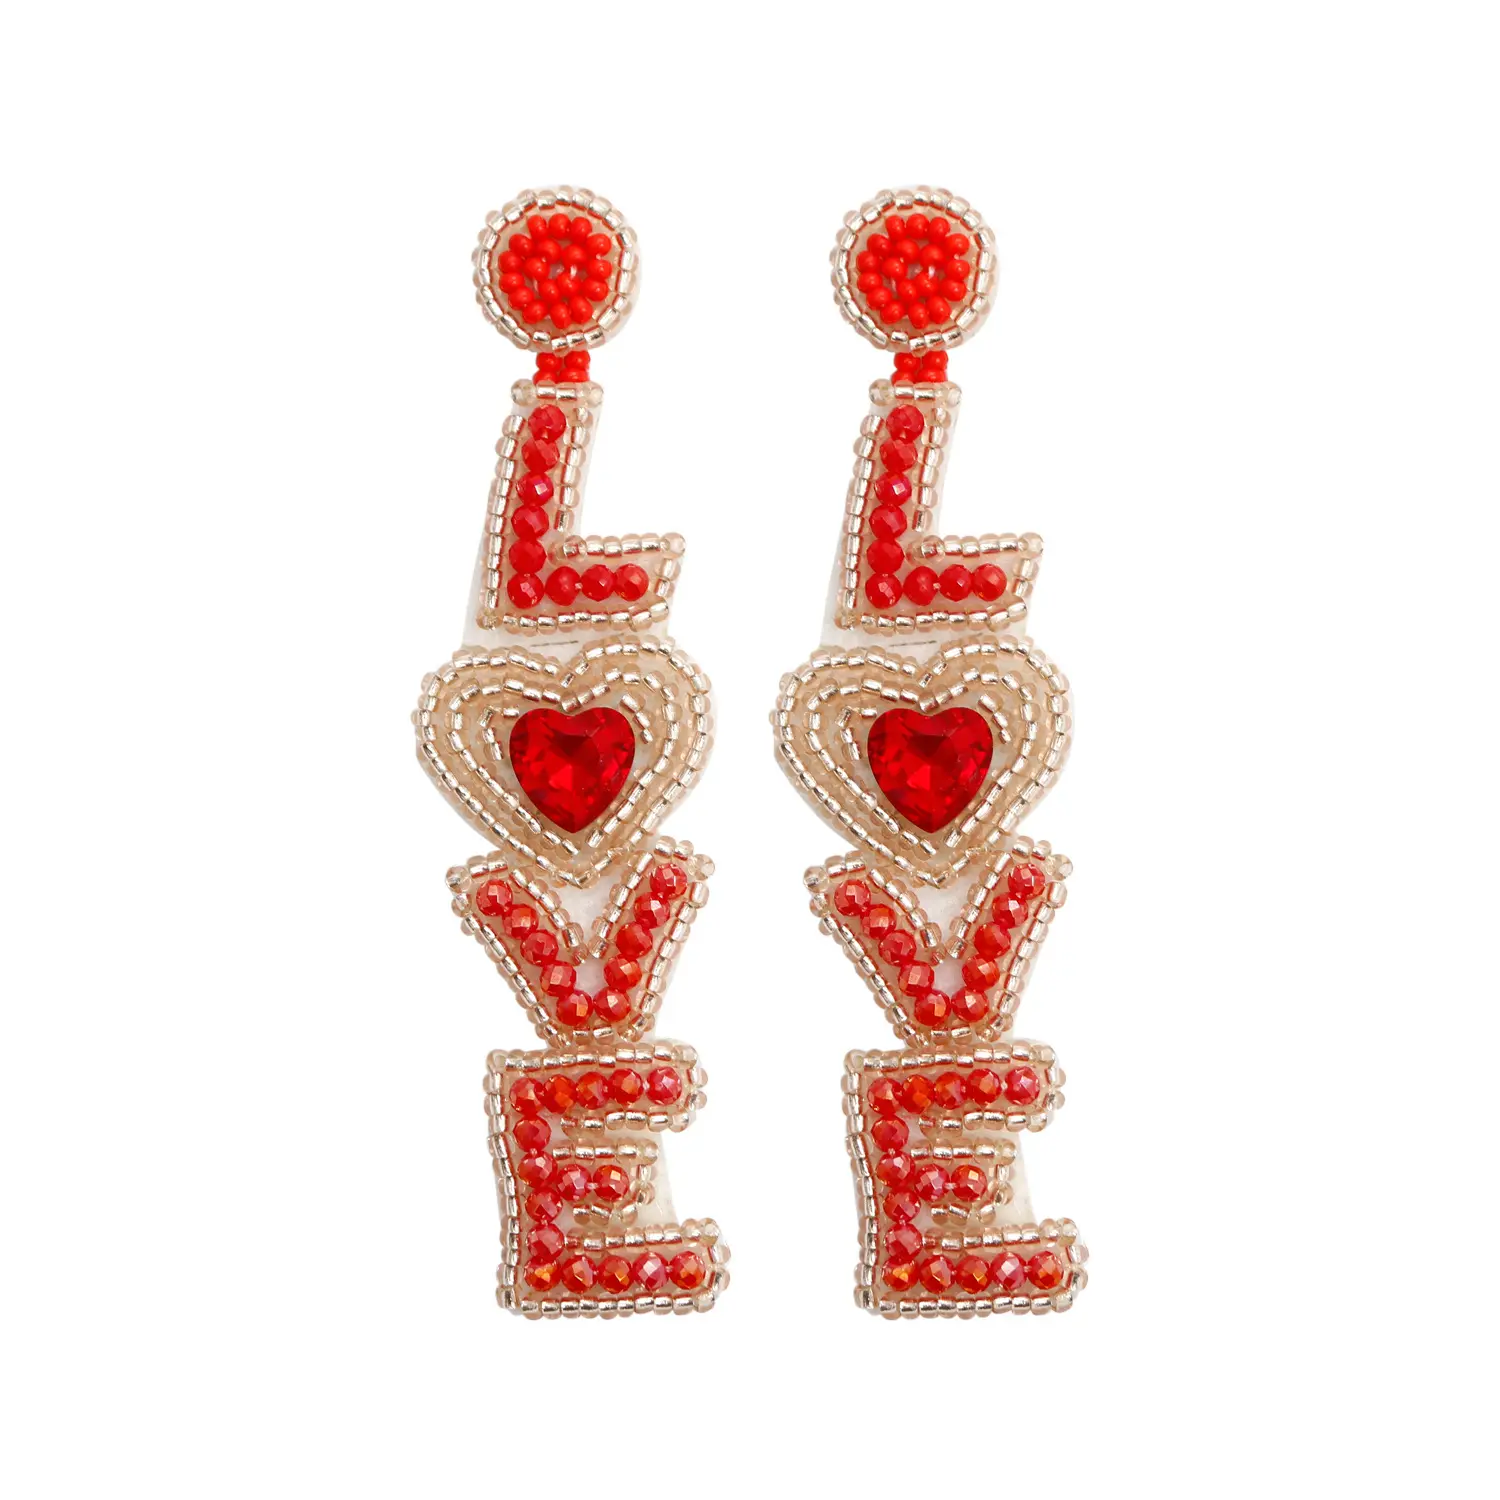 Romantic Valentine's Day Gifts LOVE Letter Earrings Hand-woven Bohemian Rice Beads Valentine's Day Earrings For Women Girls